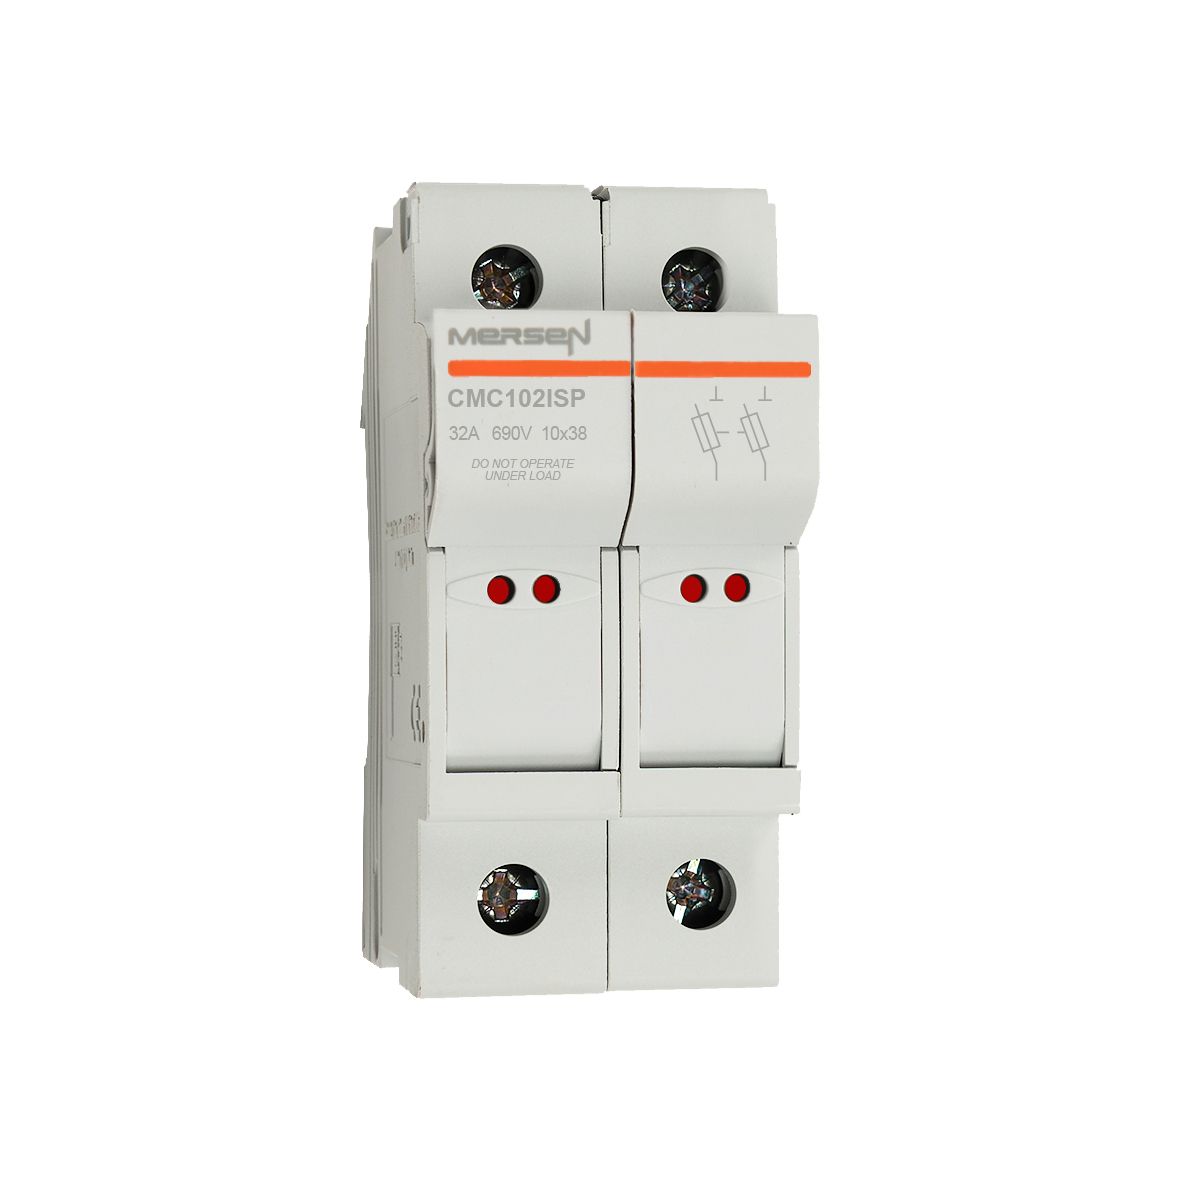 C1062763 - modular fuse holder, IEC, 2P, indicator light, 10x38, DIN rail mounting, IP20